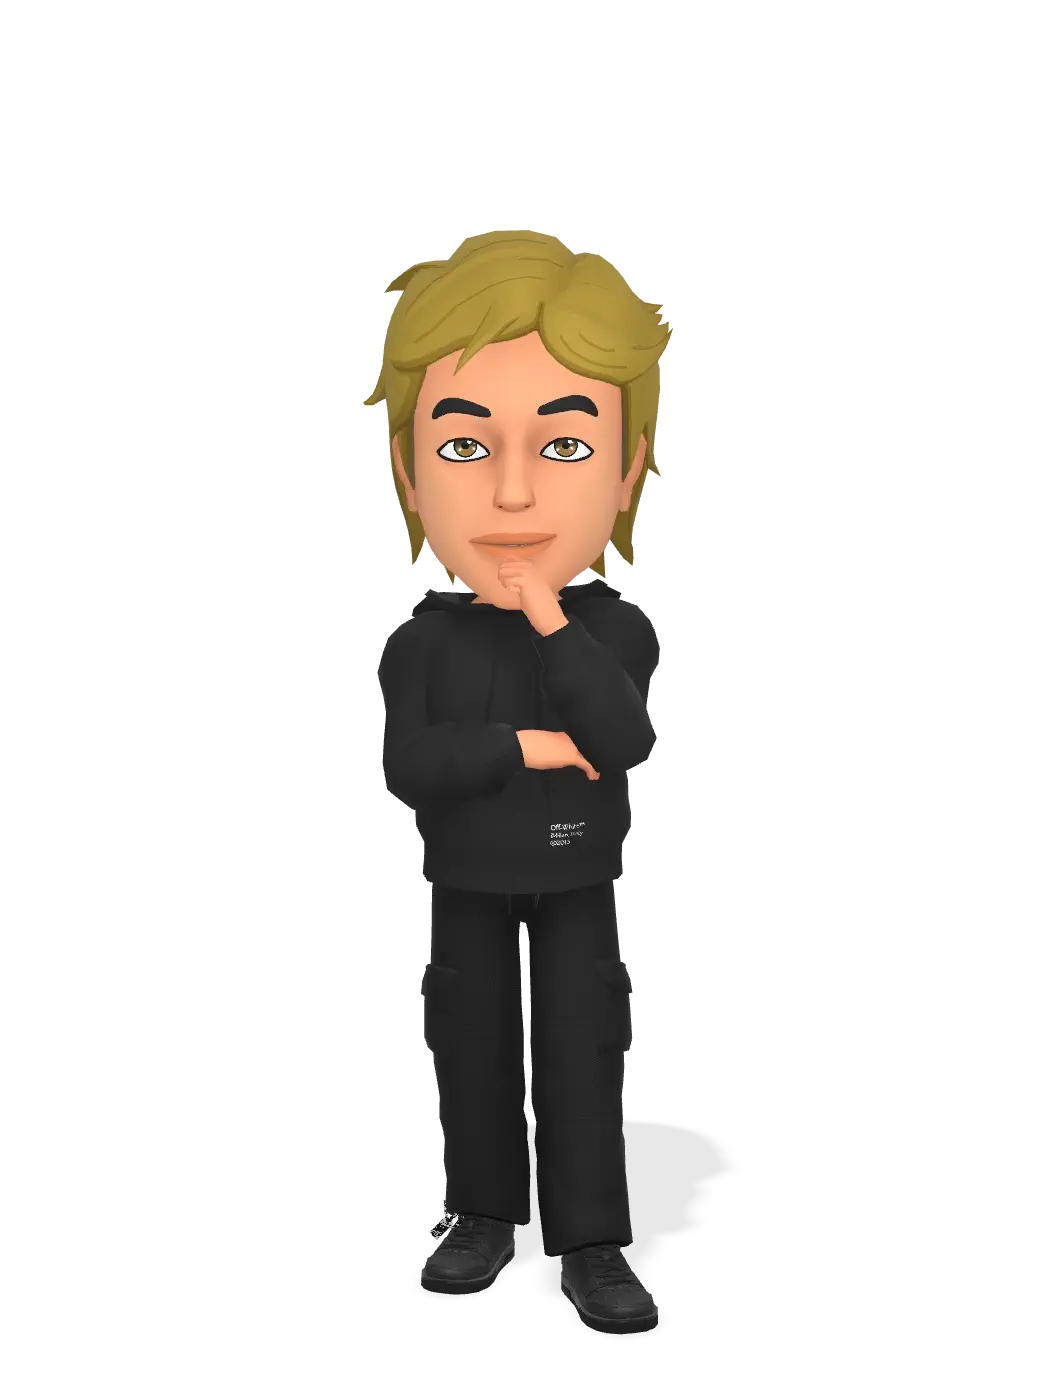 3D Bitmoji for dariusdm avatar